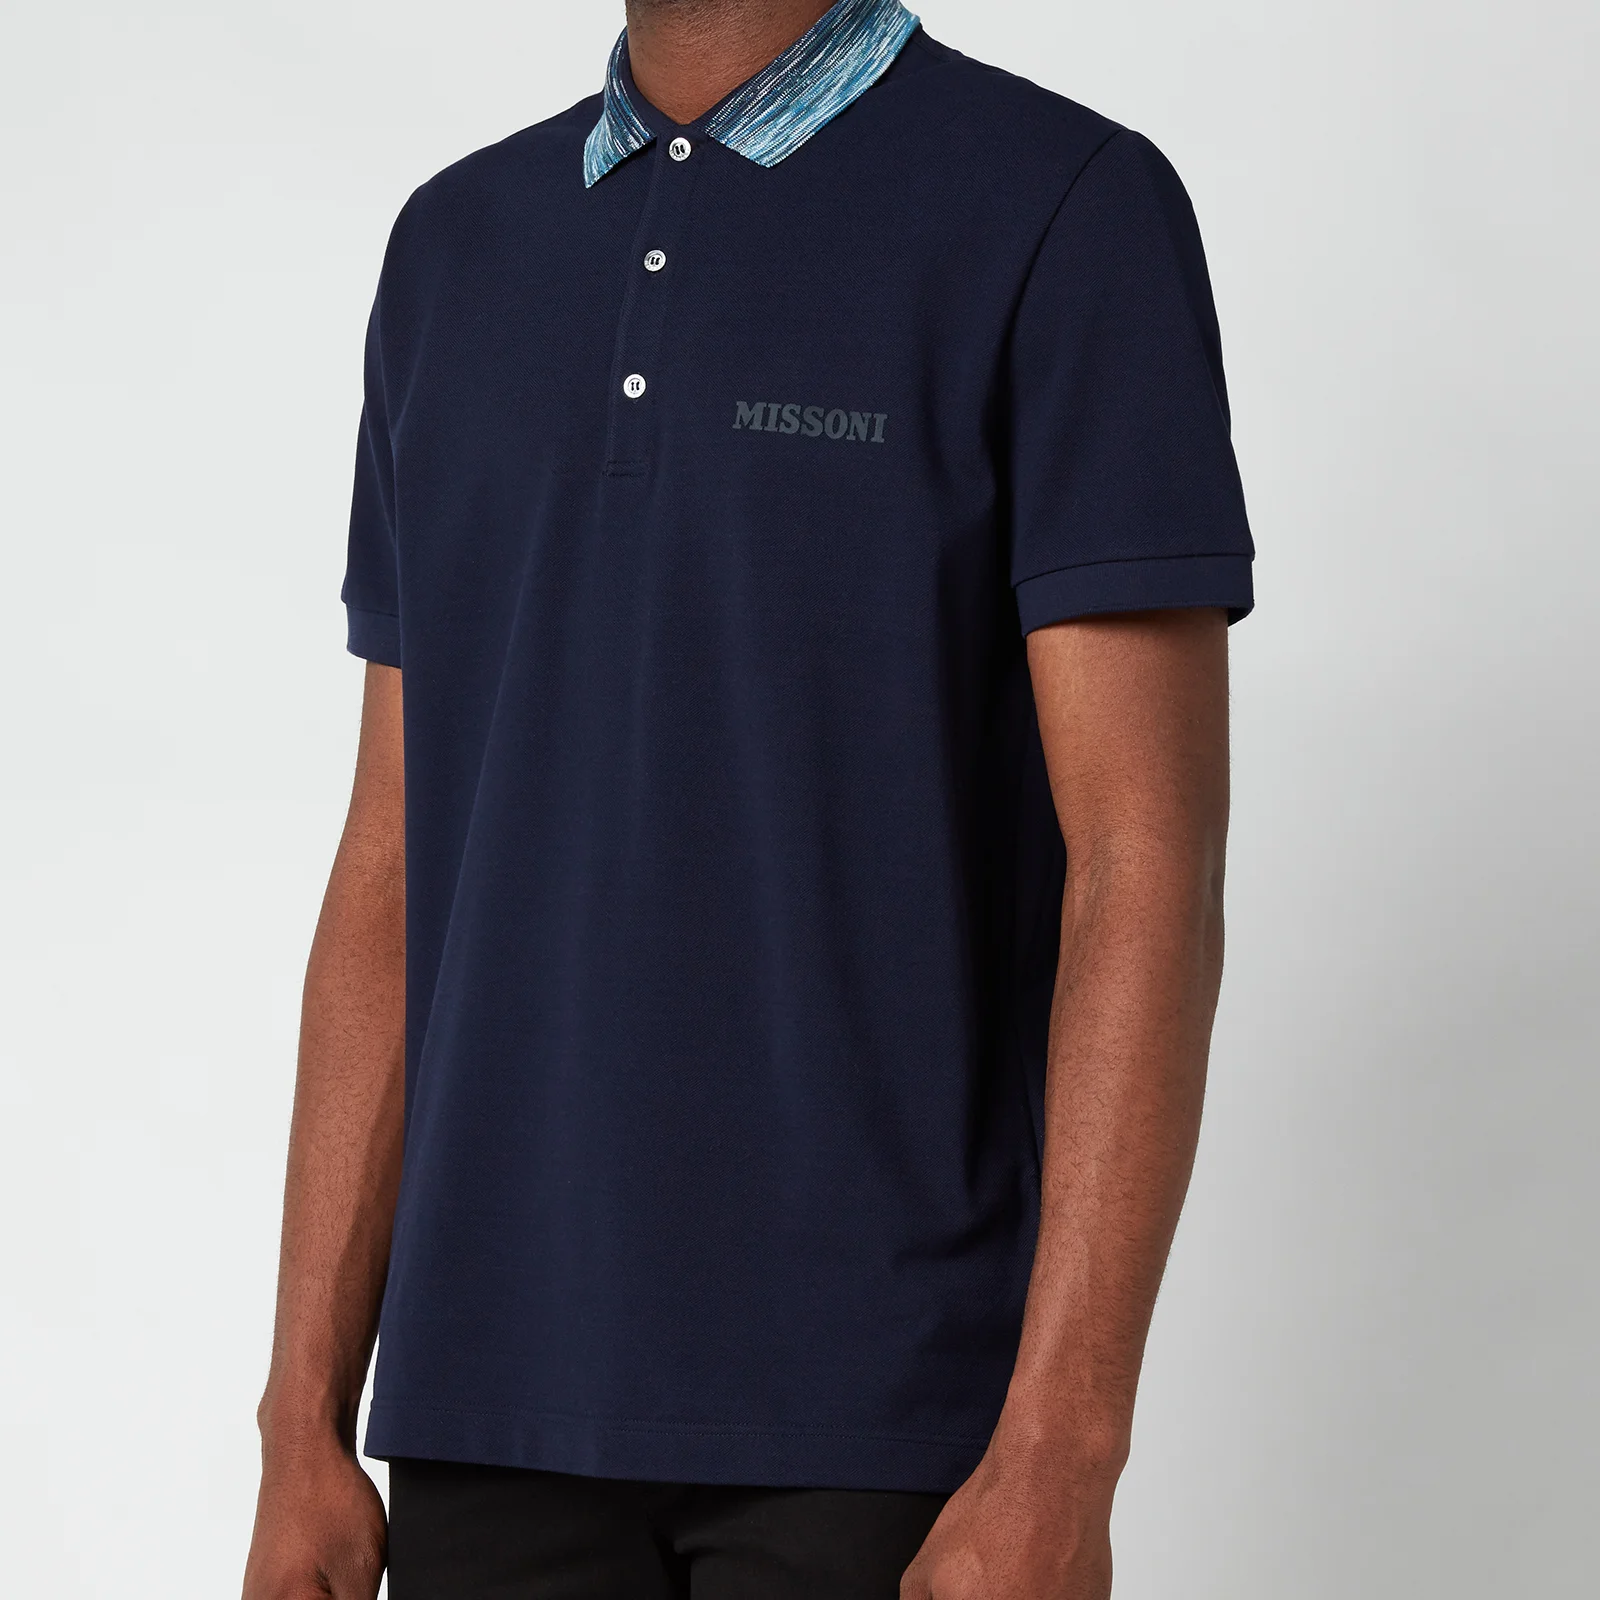 Missoni Men's Contrast Collar Pique Polo Shirt - Navy Image 1